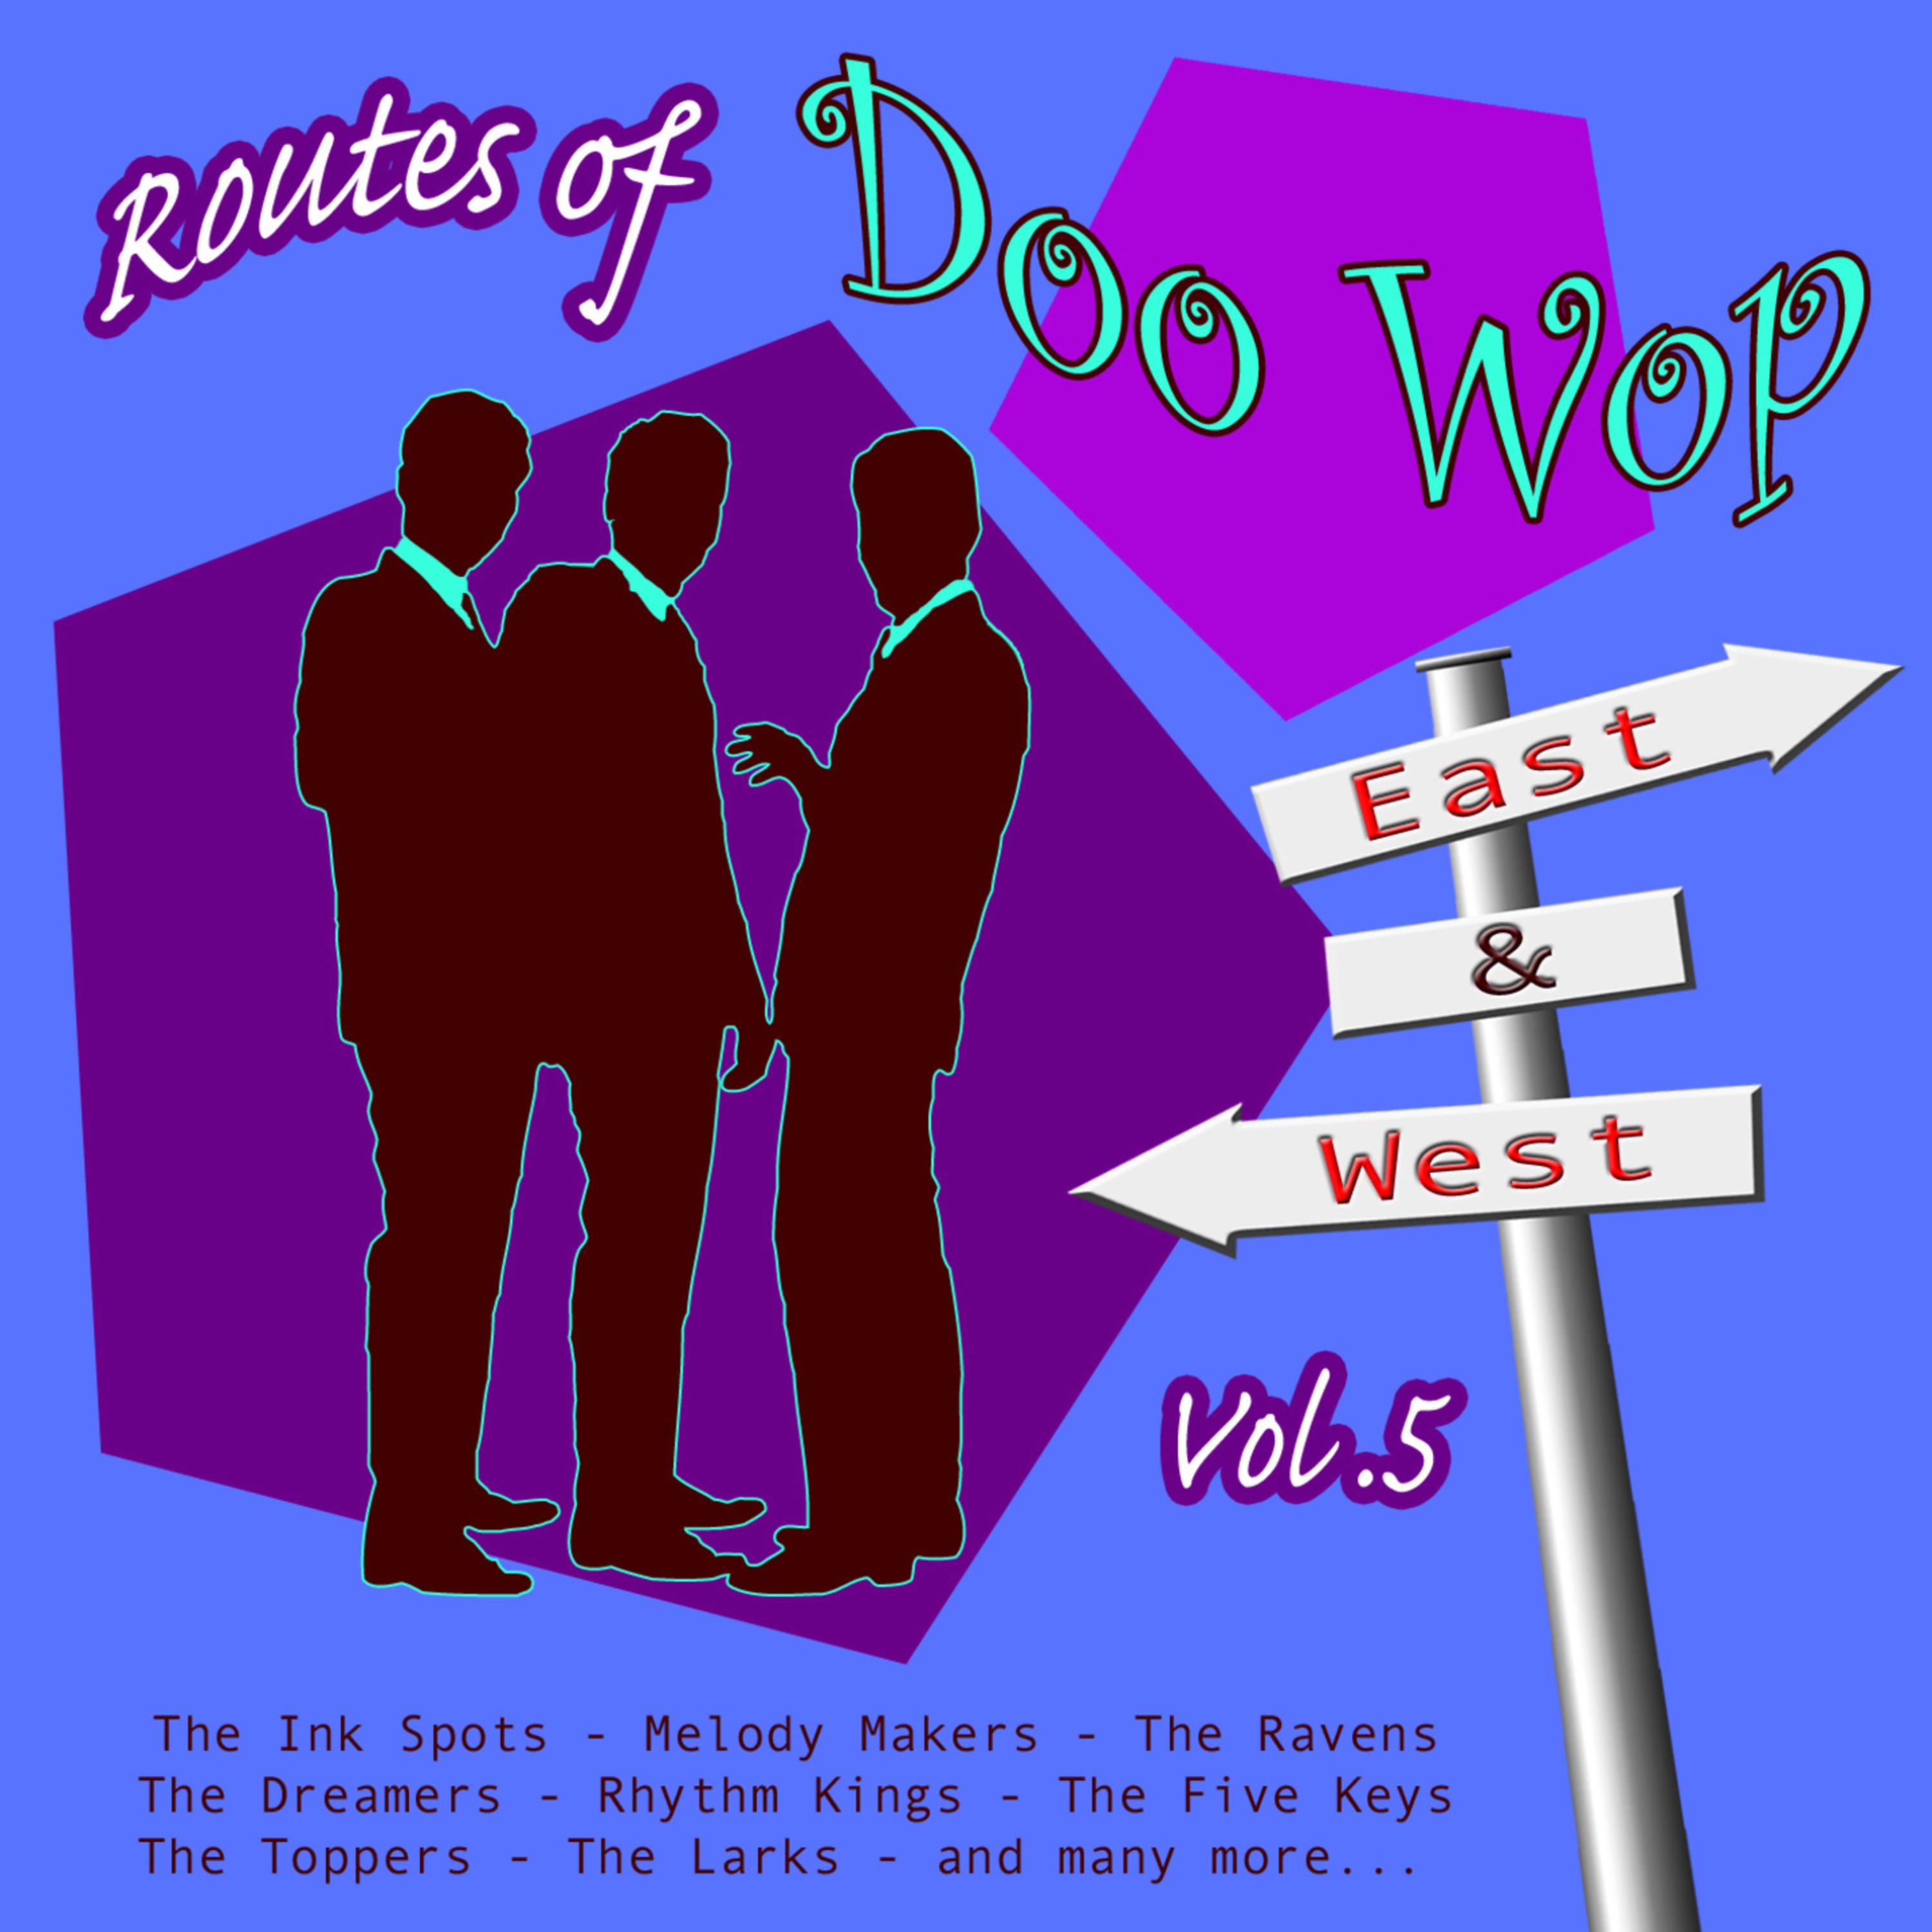 Routes Of Doo Wop - East & West Vol 5